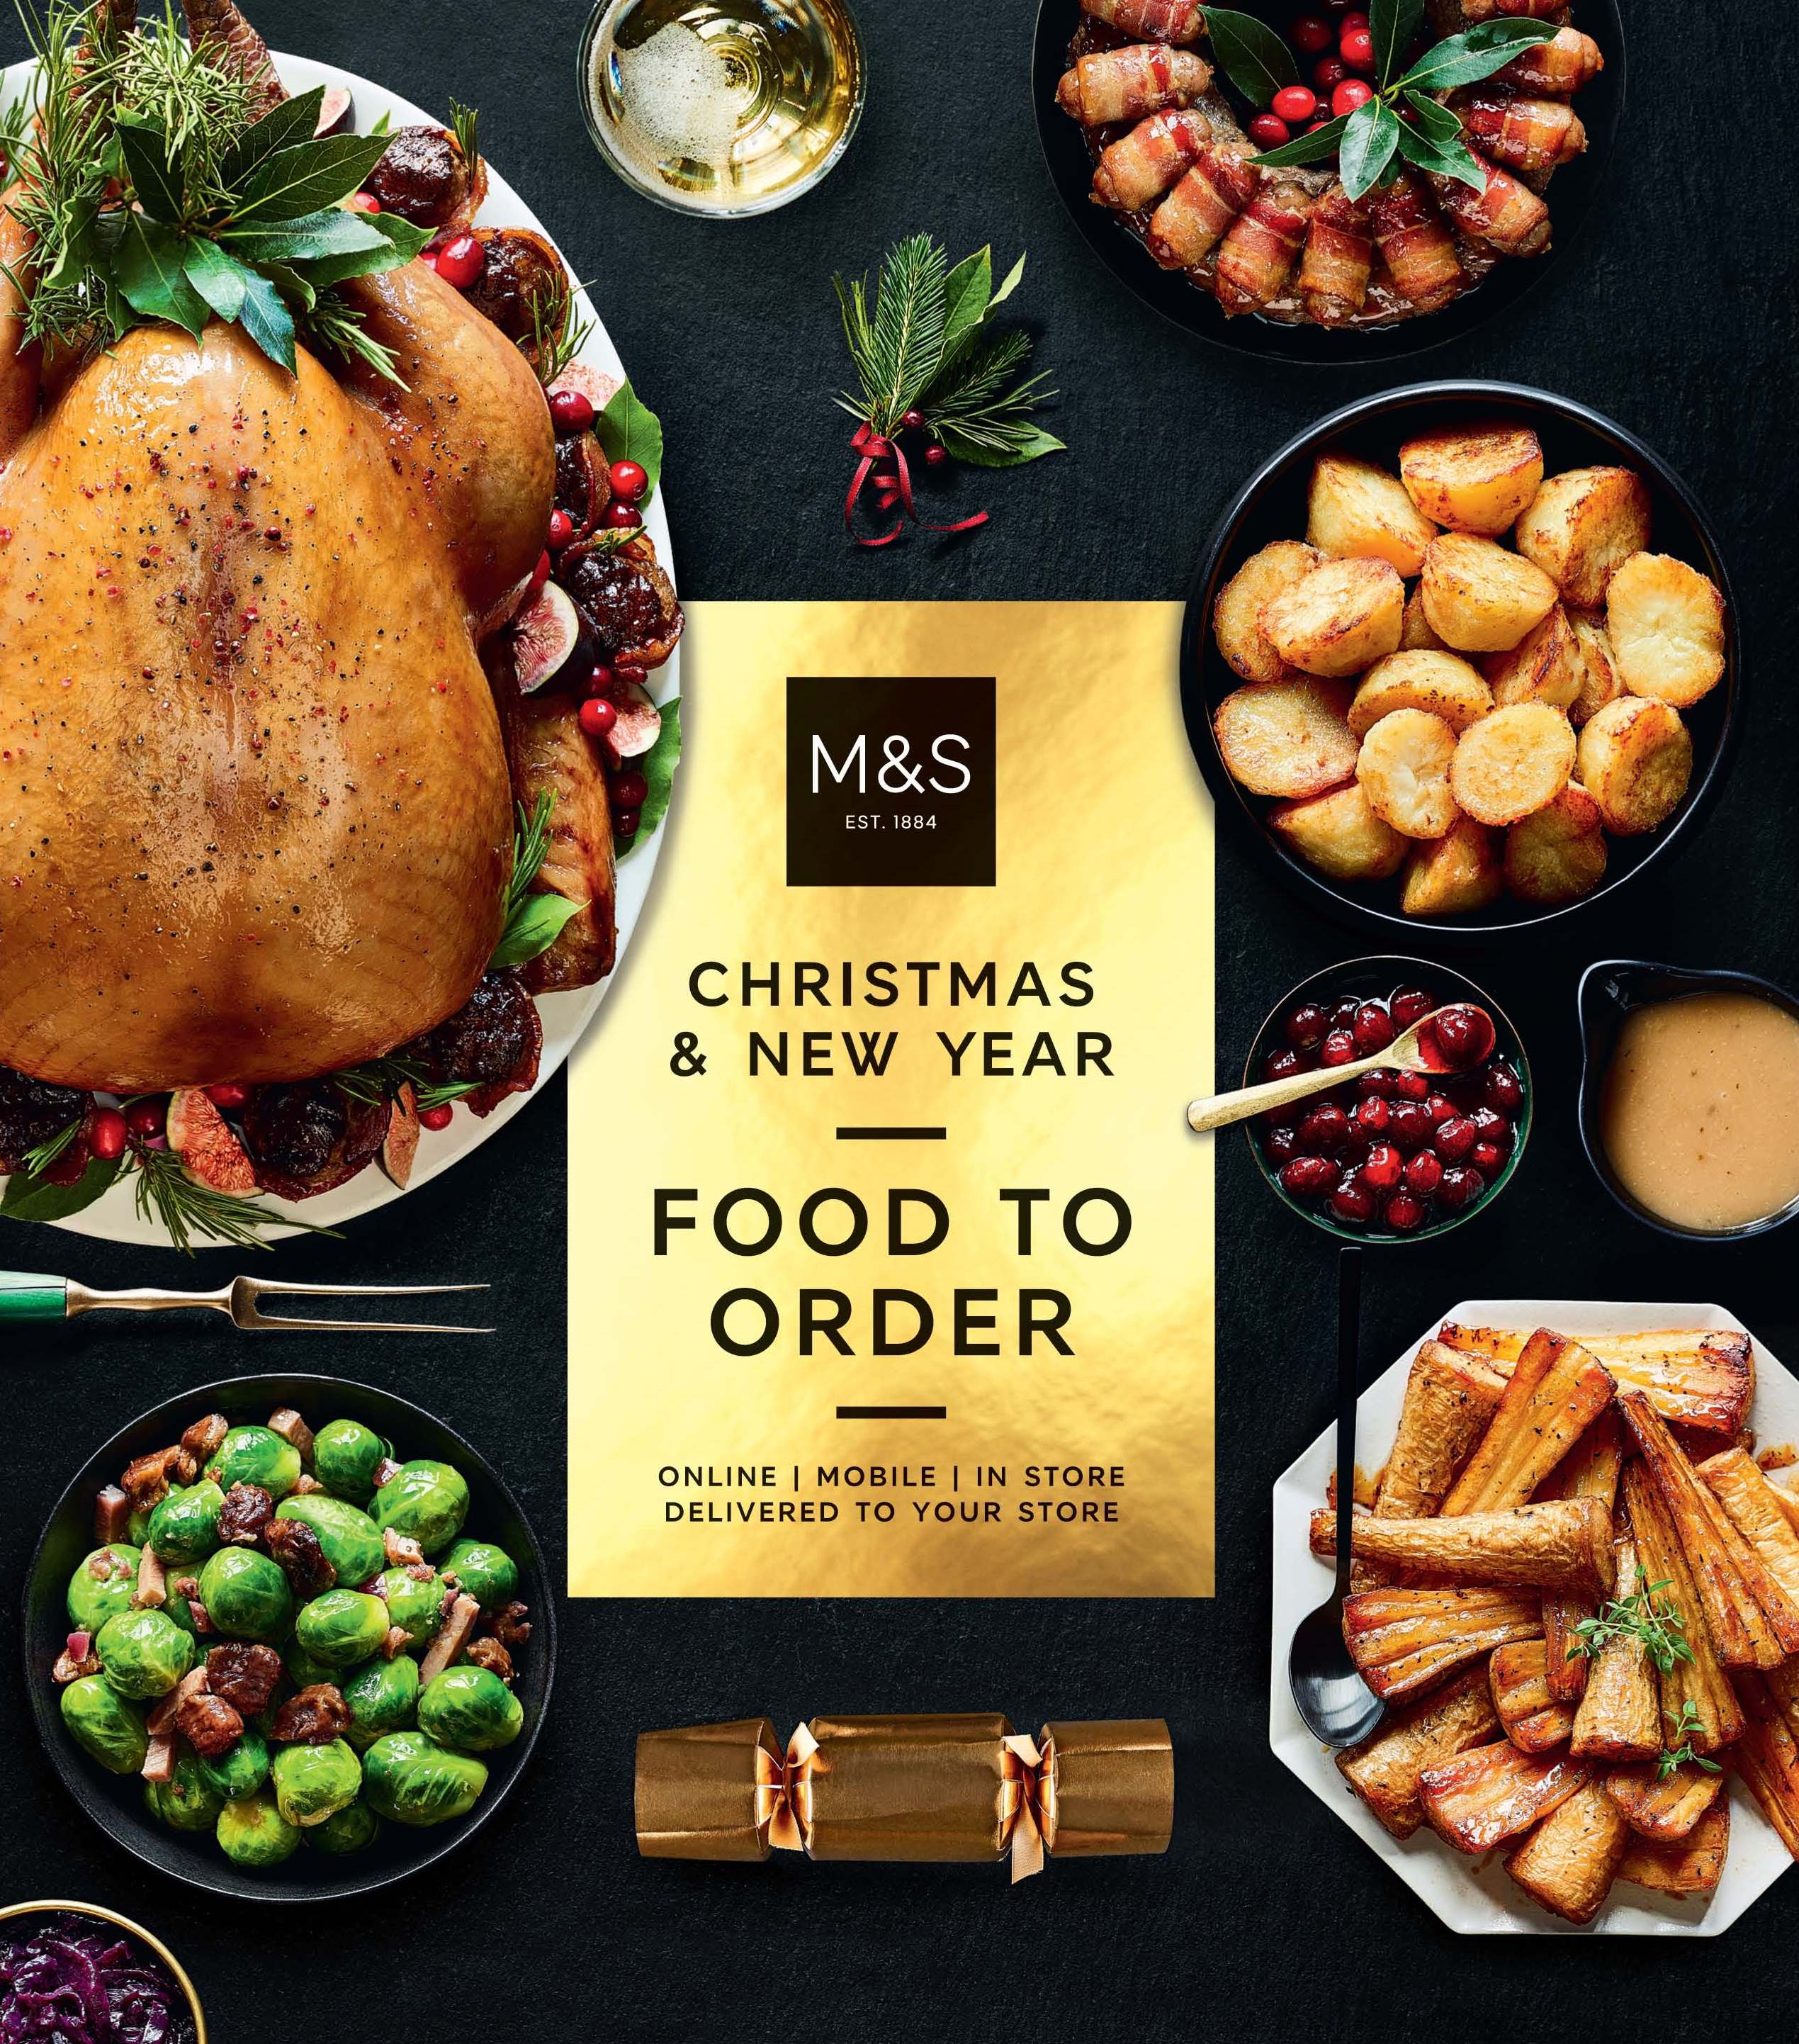 marks and spencer christmas food catalogue 2018 pdf